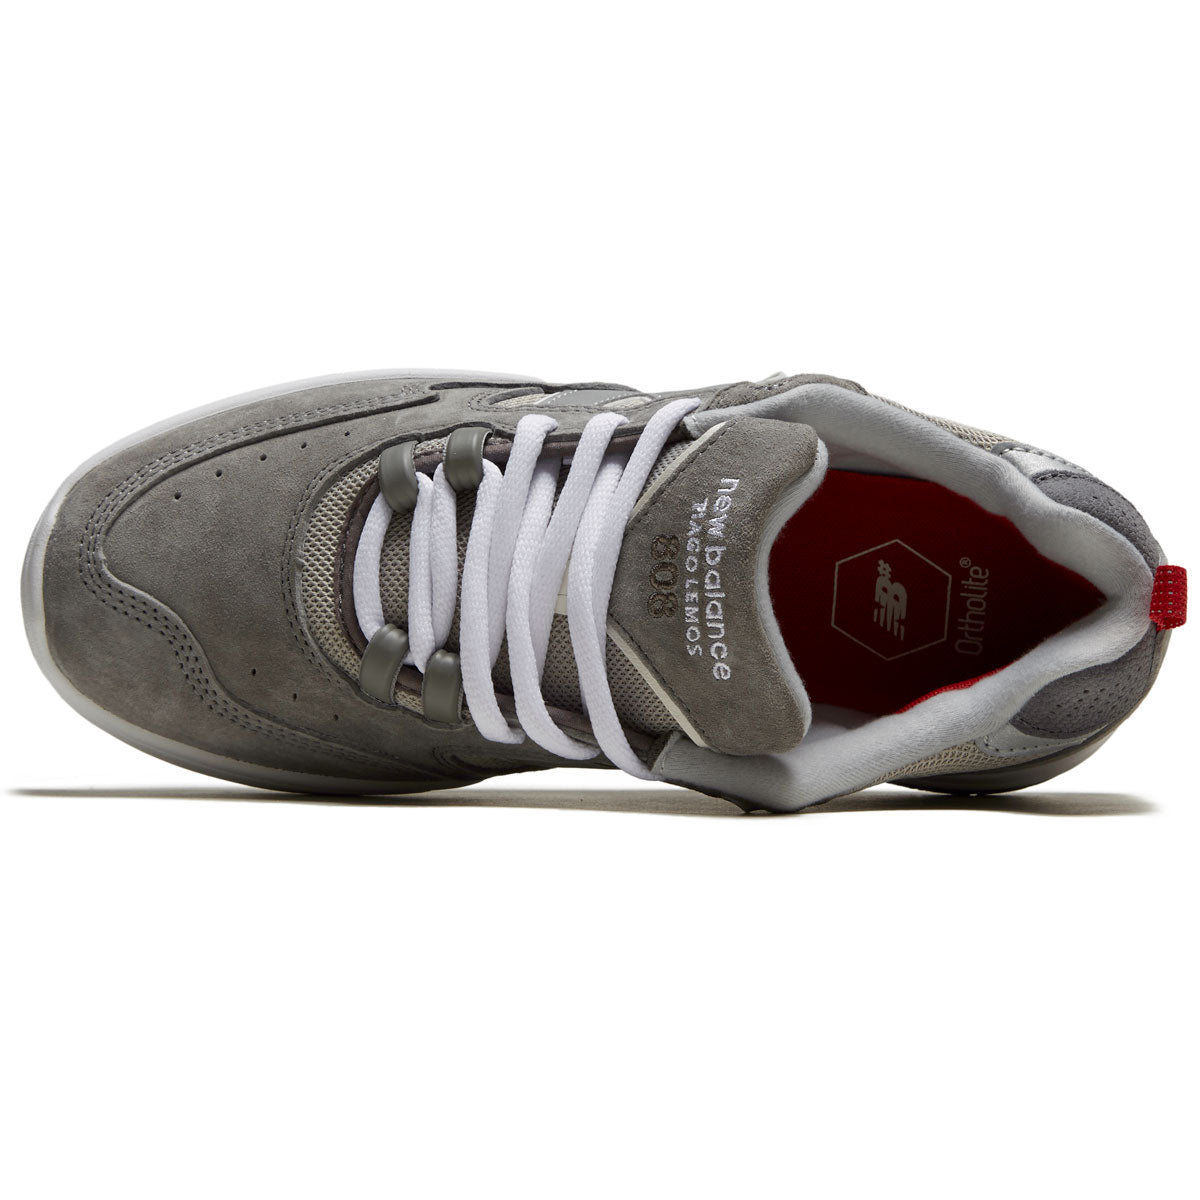 New Balance 808 Tiago Grey Day Shoes - Grey/Grey image 3